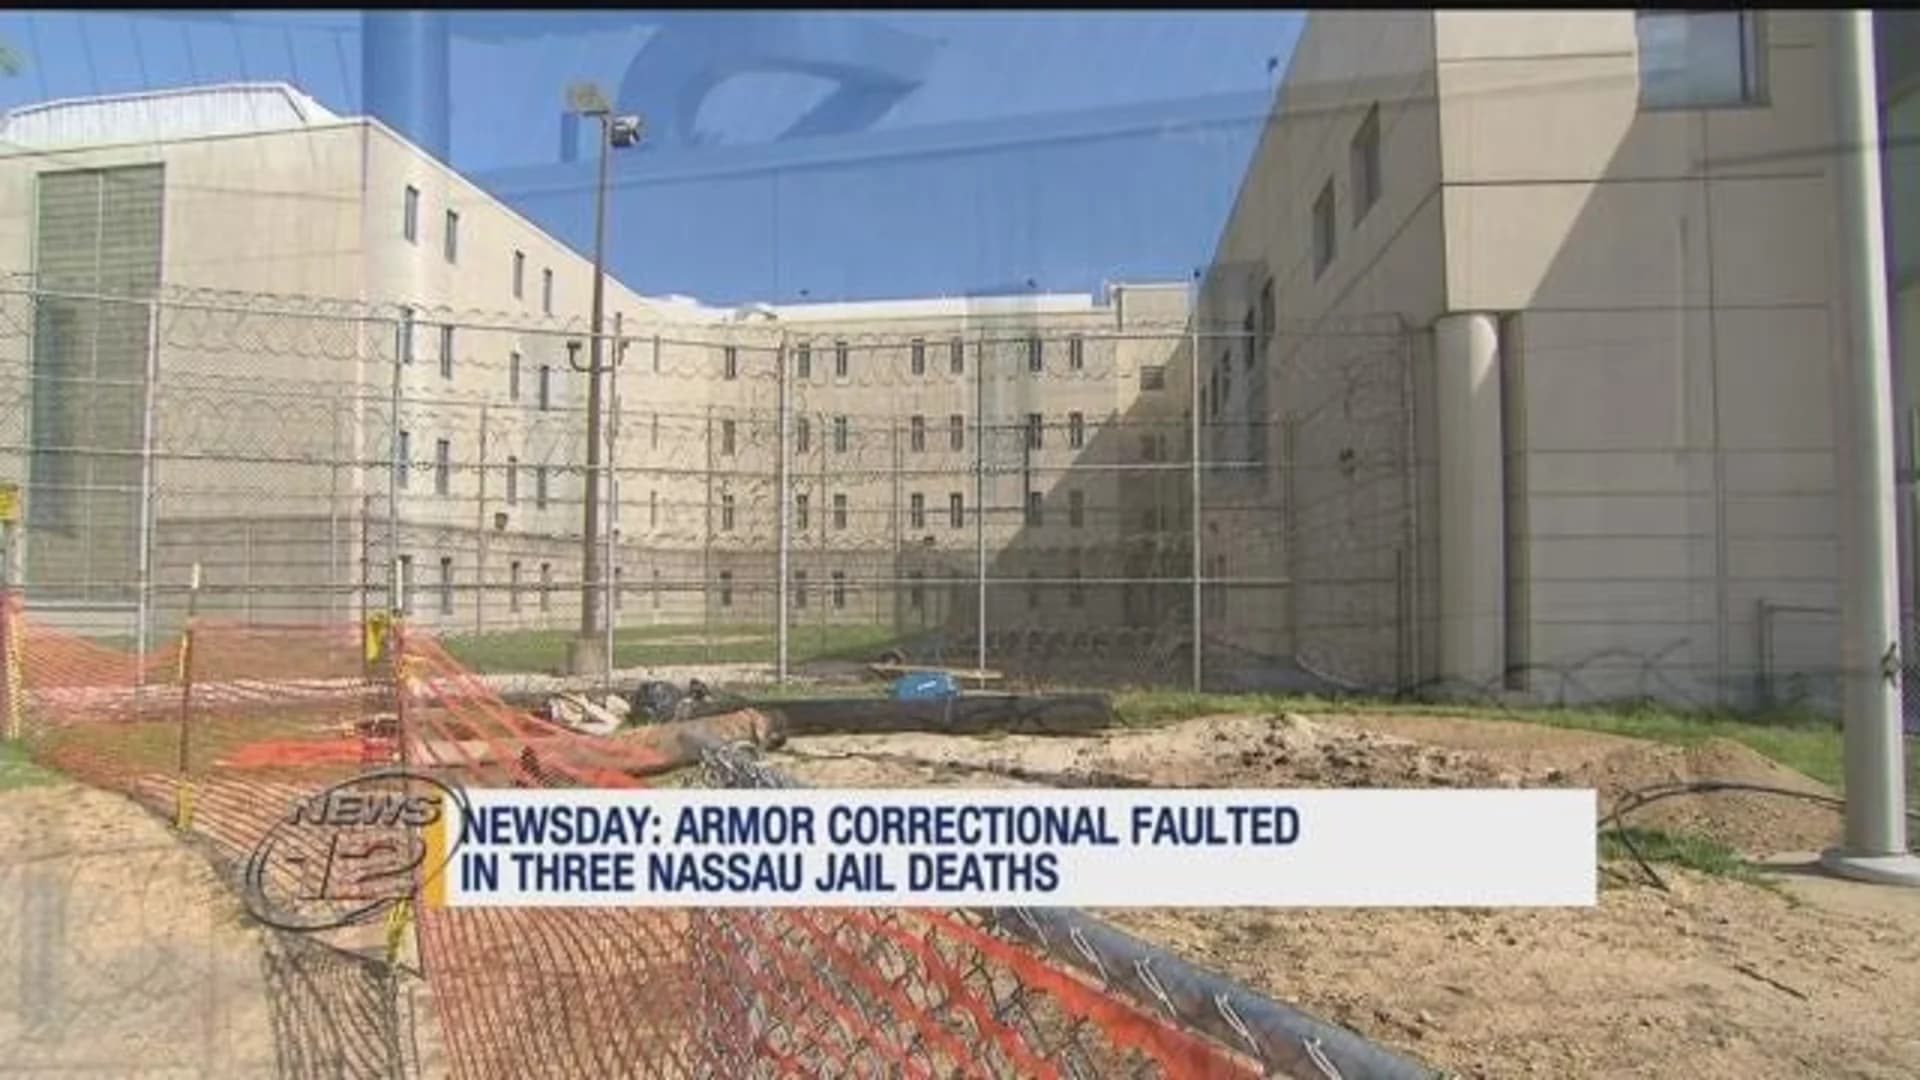 Newsday: Armor Correctional faulted in 3 Nassau jail deaths